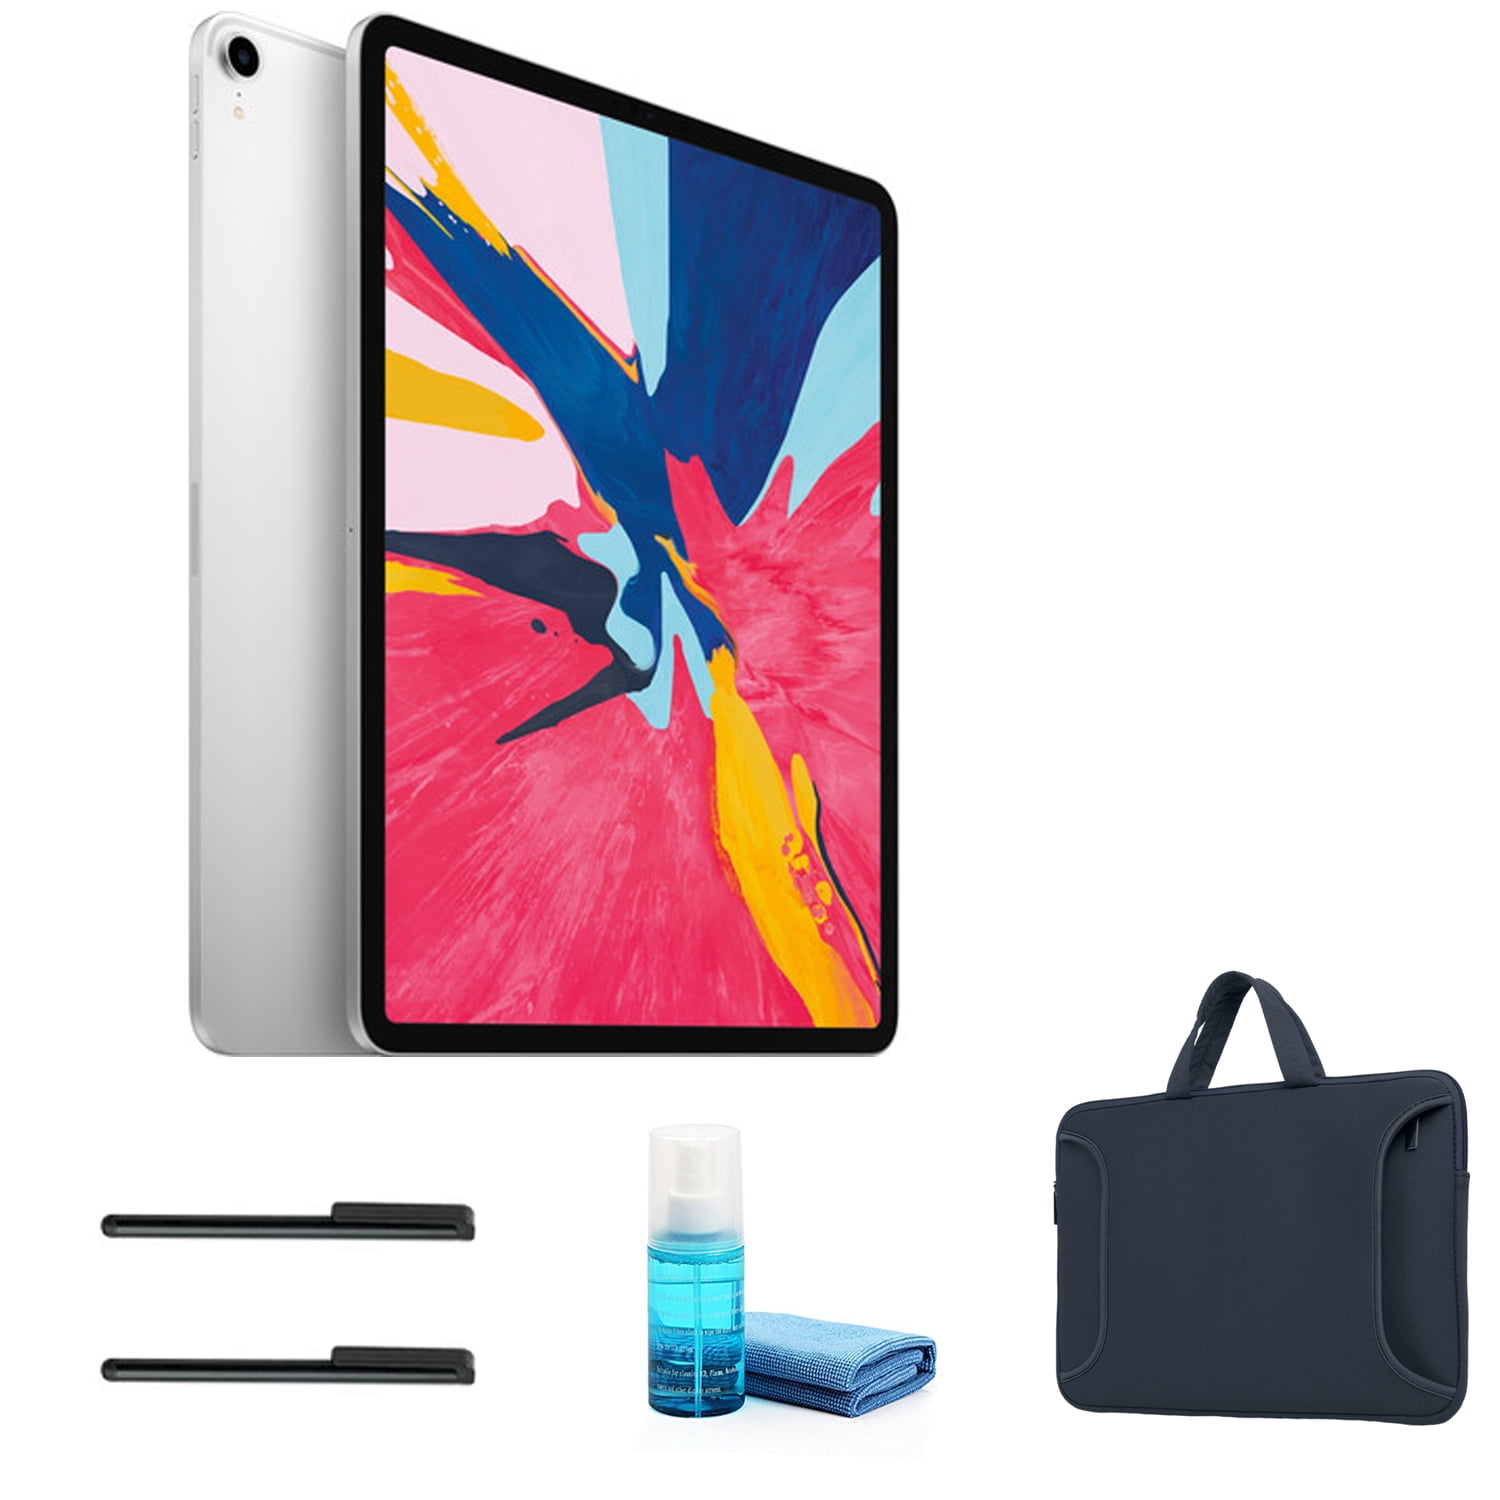 Apple iPad Pro 12.9 Inch (Late 2018, 1TB, Wi-Fi + 4G LTE, Silver